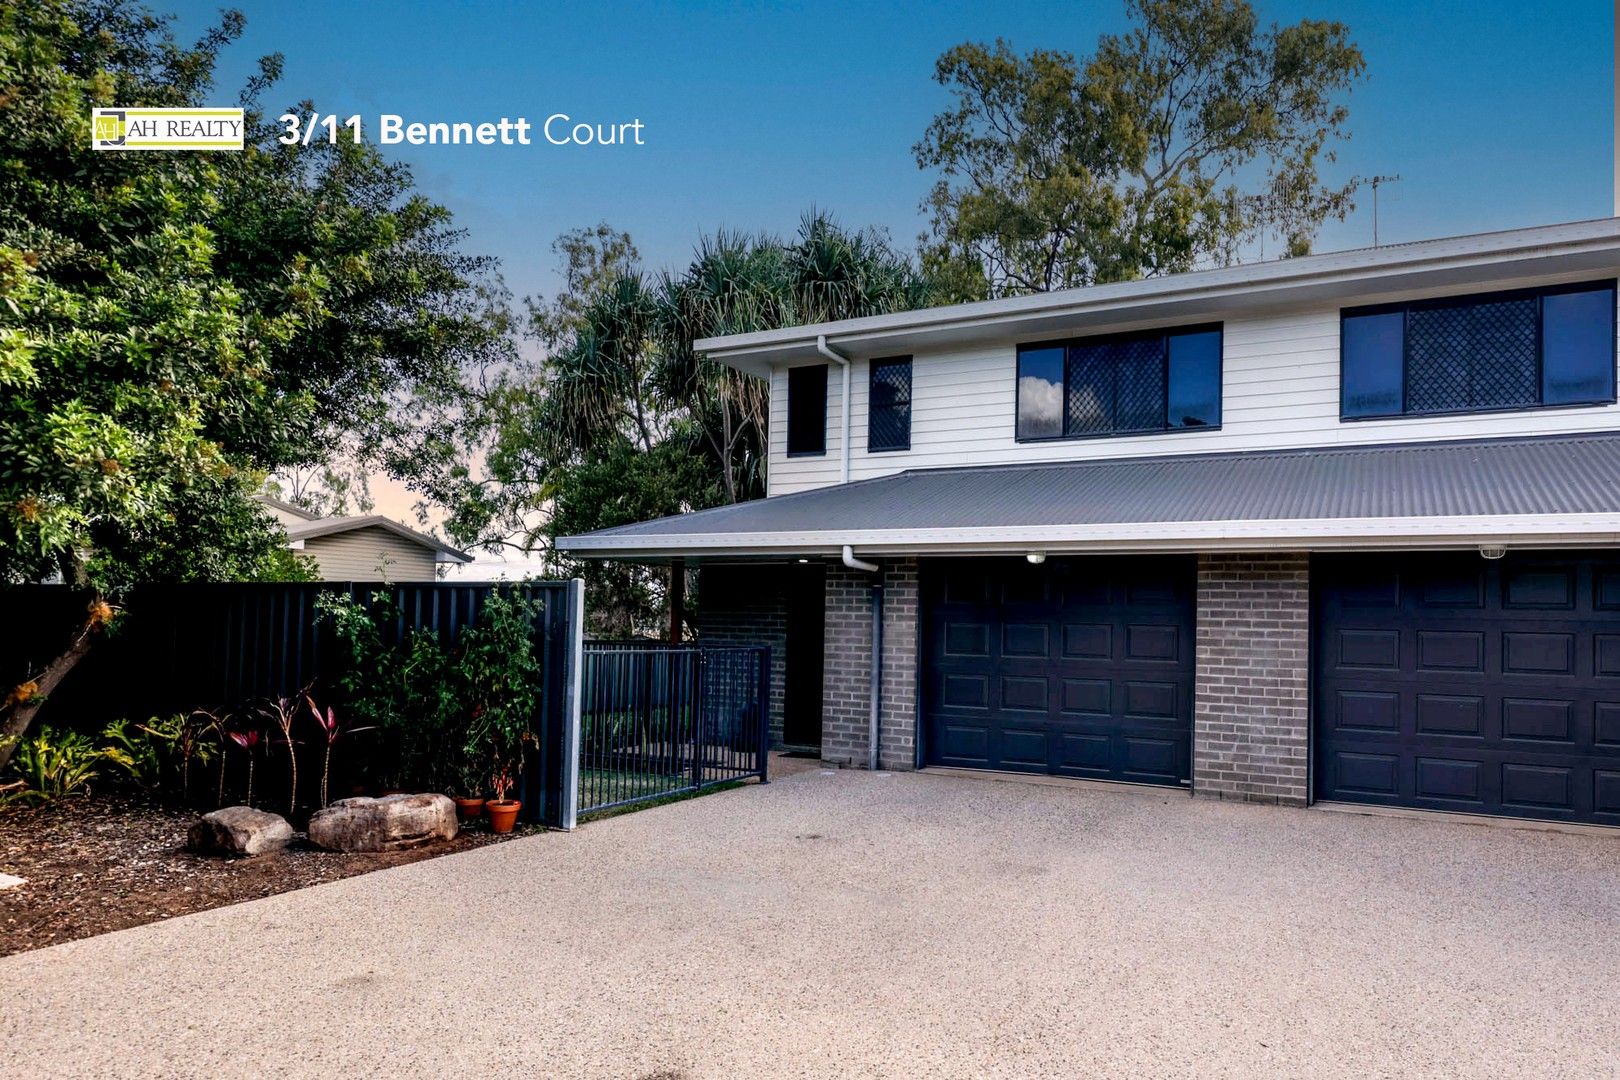 3 bedrooms Apartment / Unit / Flat in 3/11 Bennett Court MORANBAH QLD, 4744